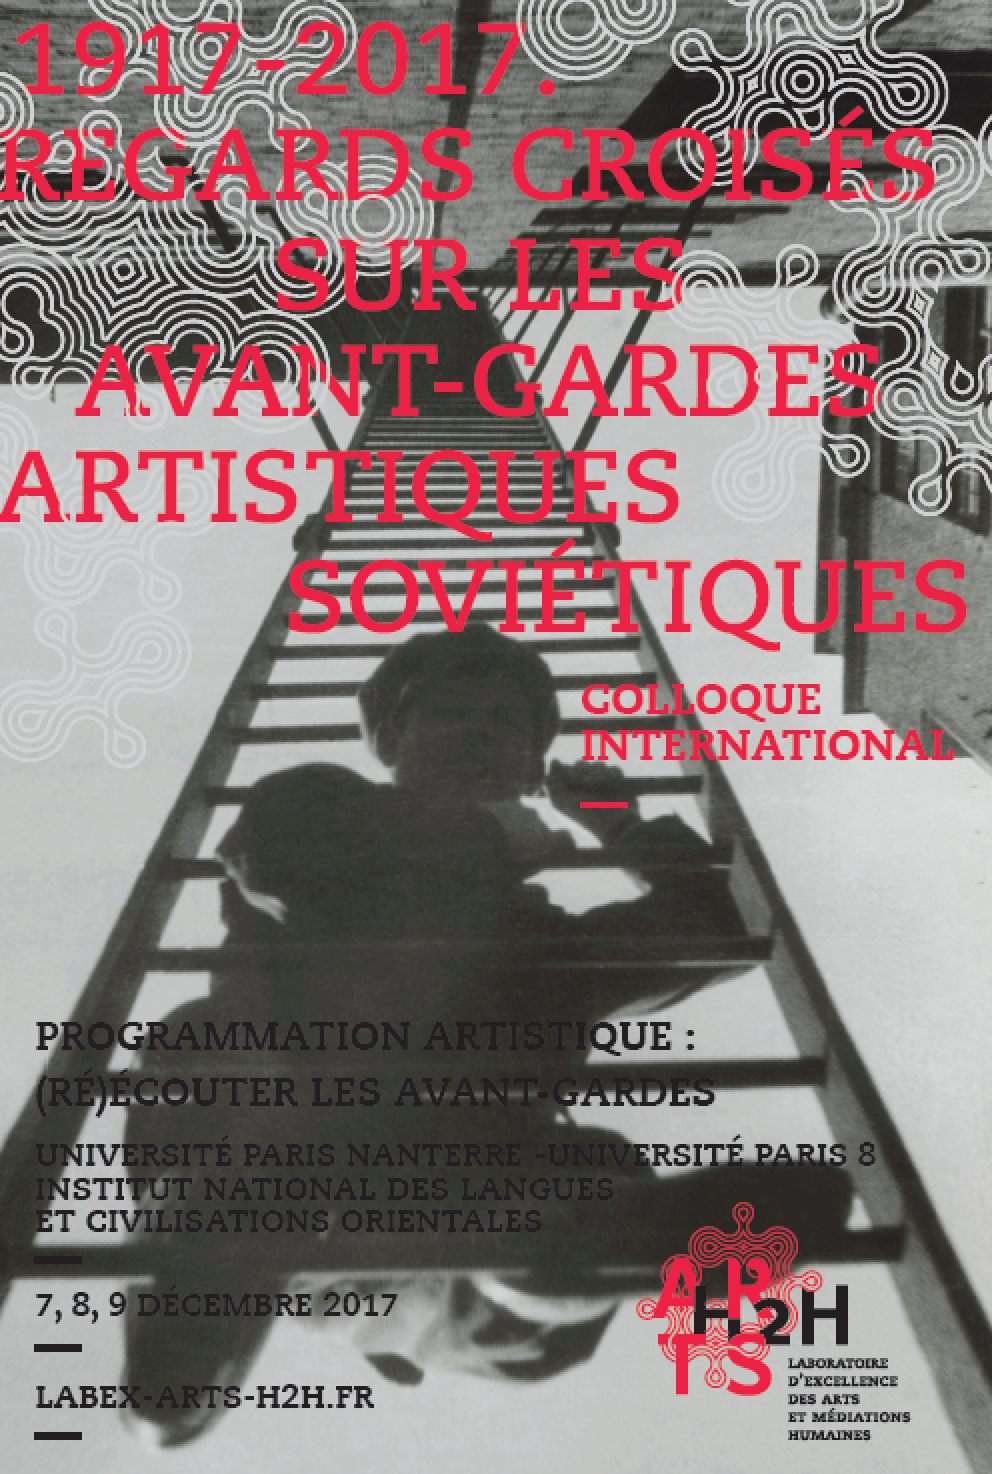 1917-2017: Comparative Looks on the Soviet Artistic Avant-Gardes (Paris)